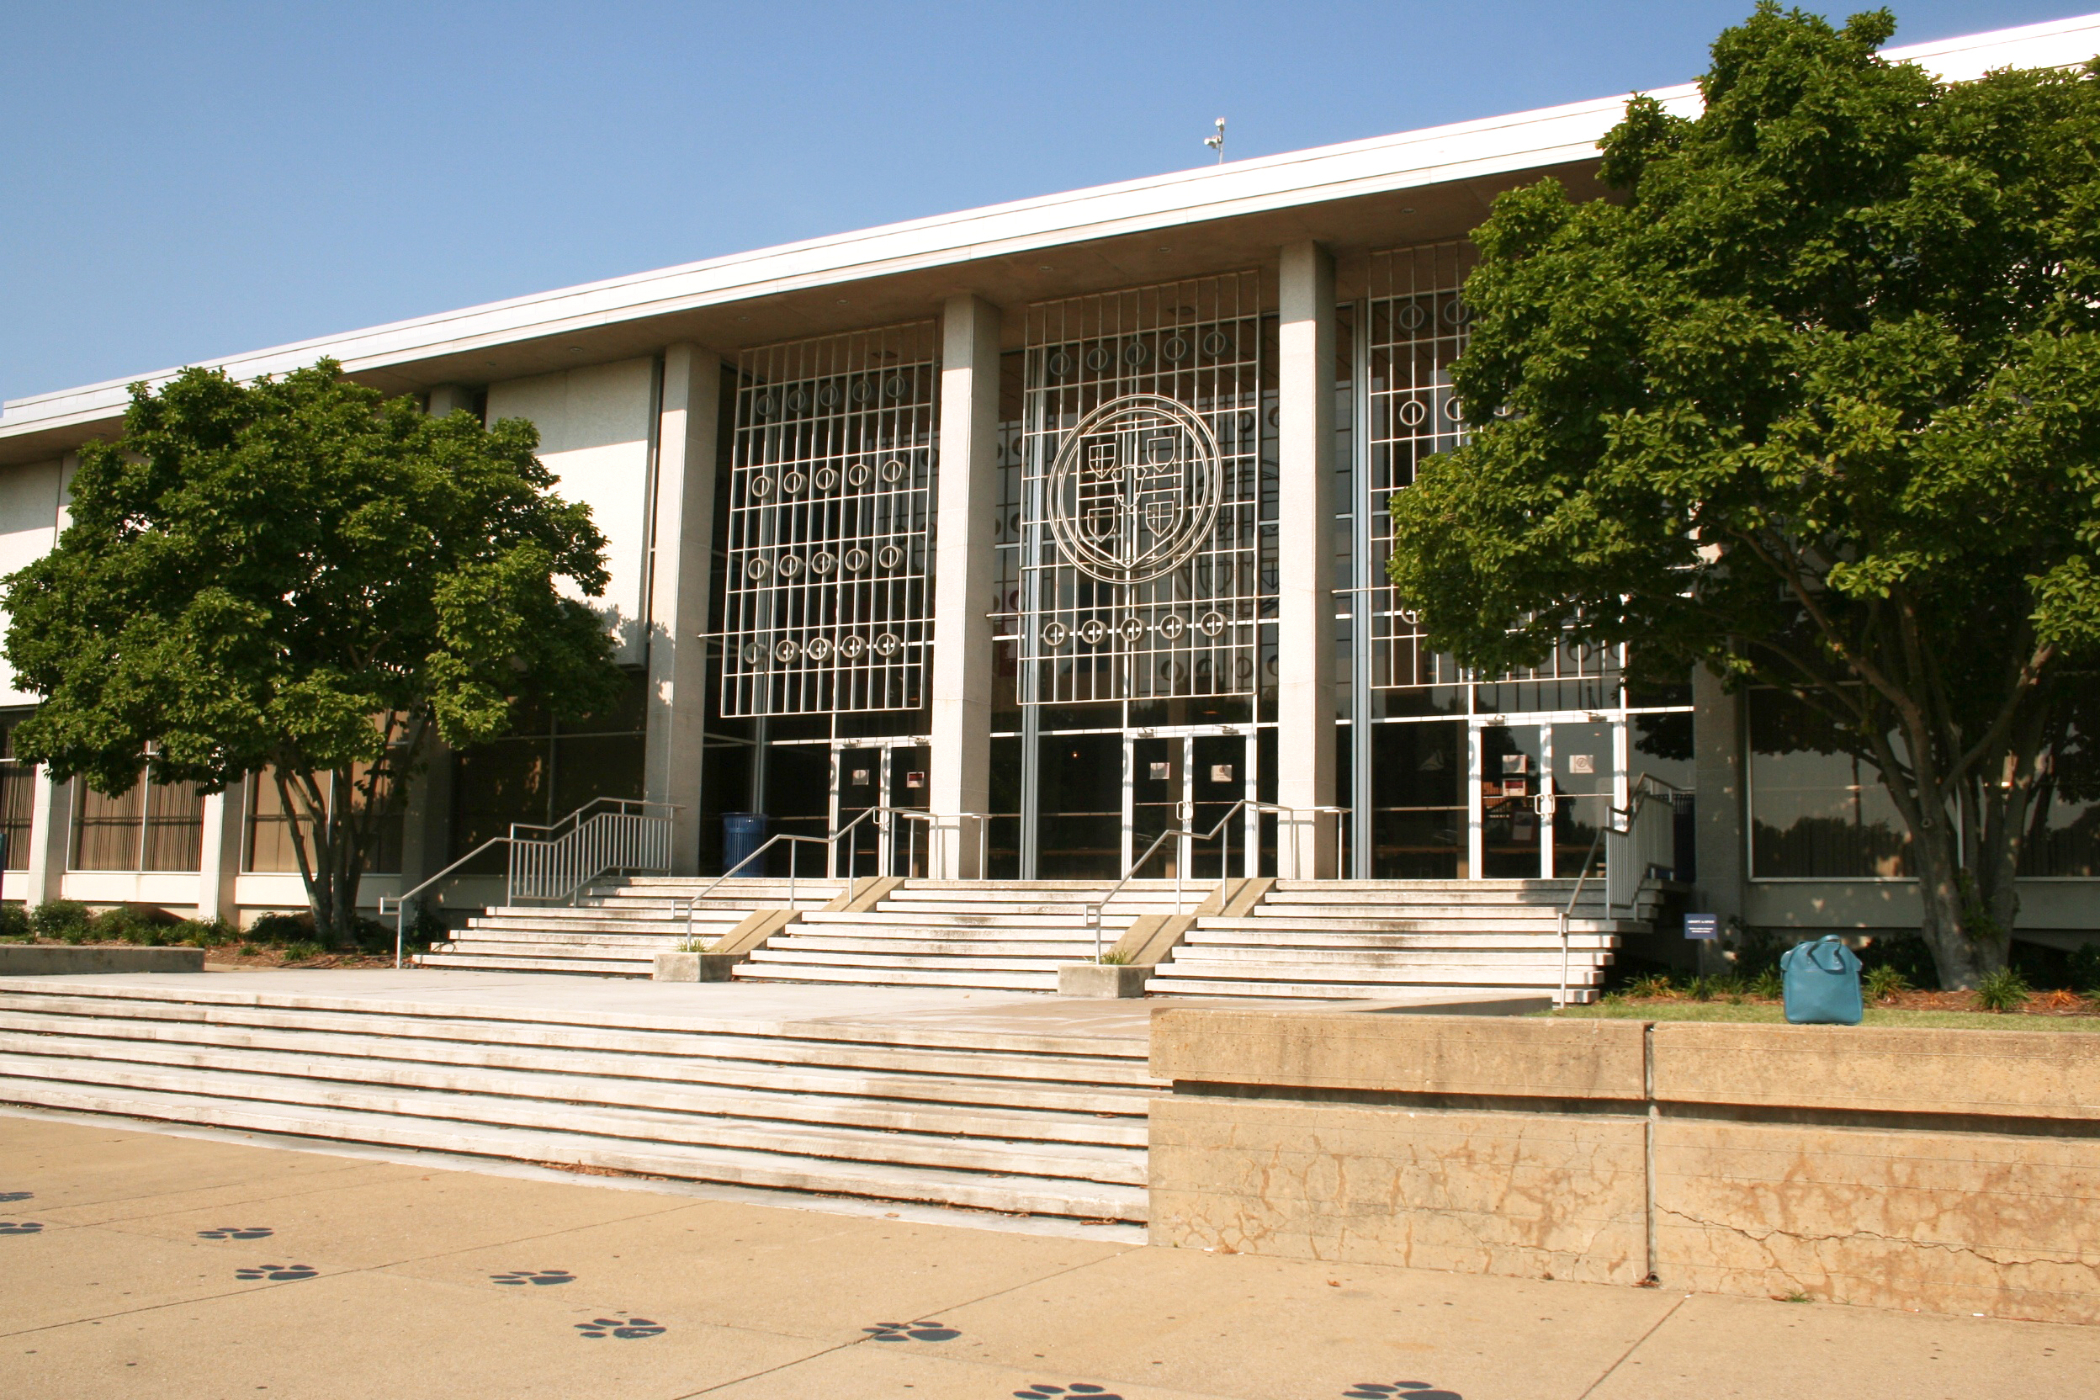 Webb University Center